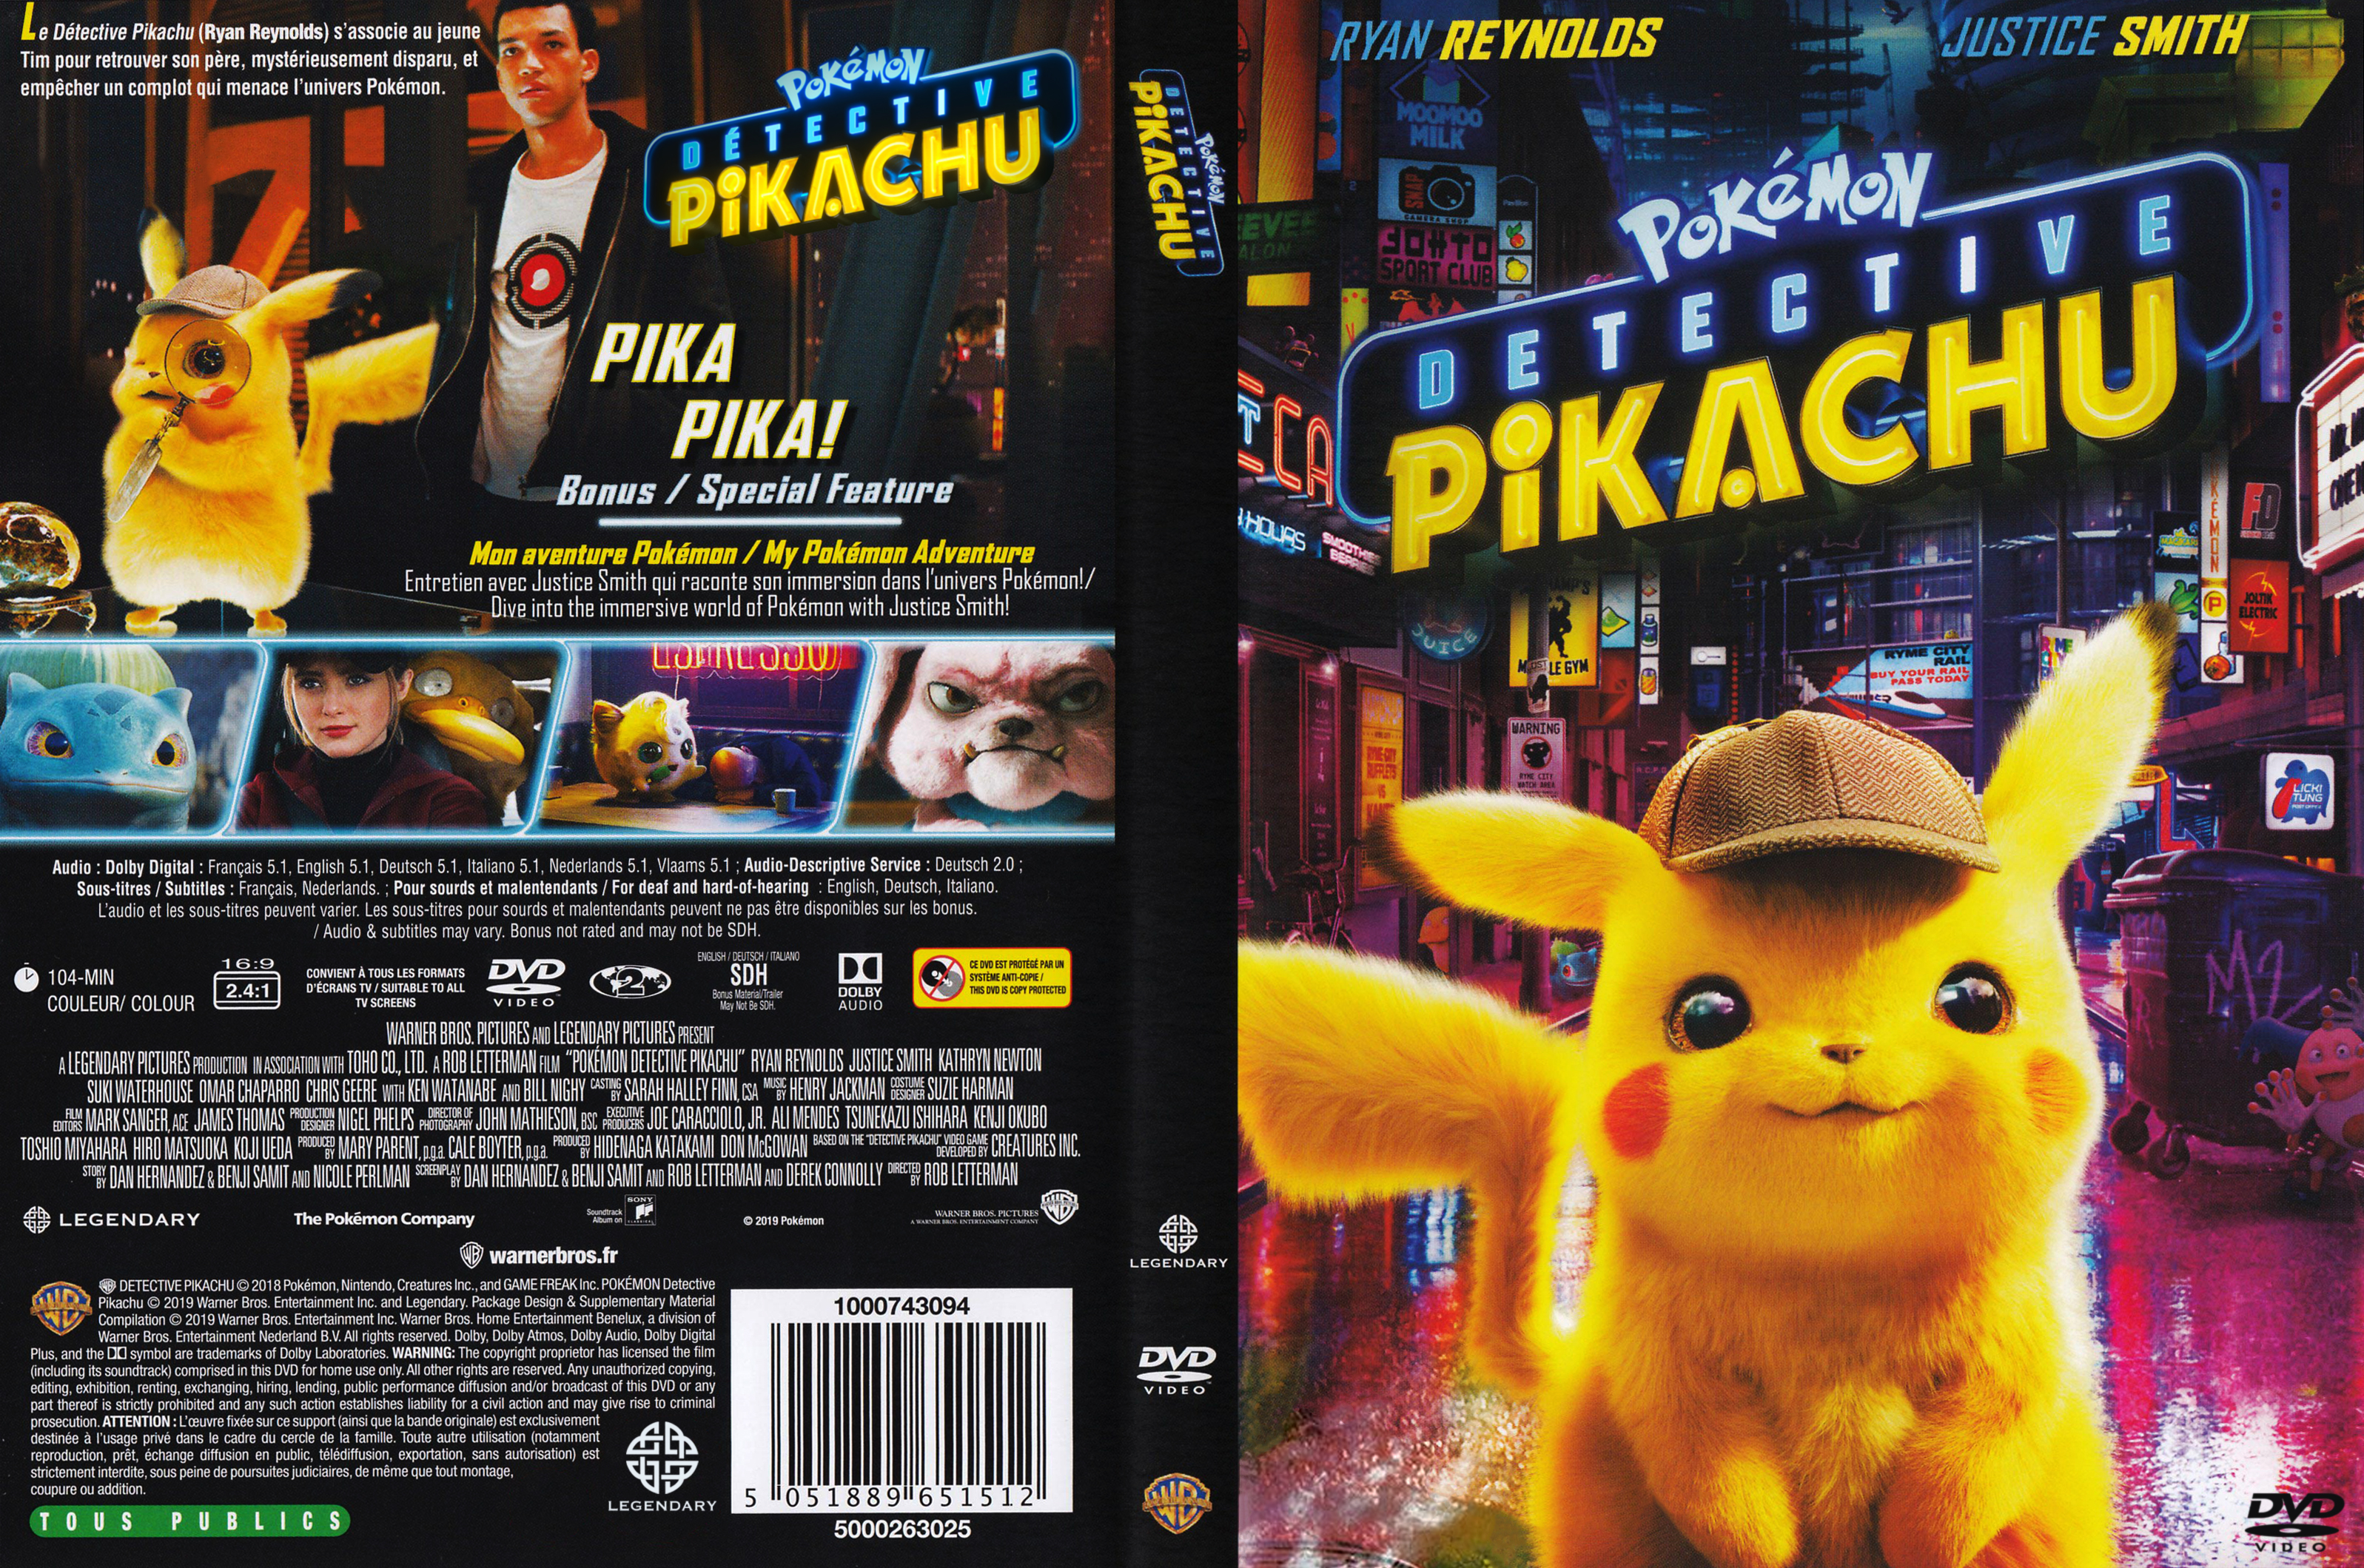 Jaquette DVD Pokemon Detective Pikachu custom v3